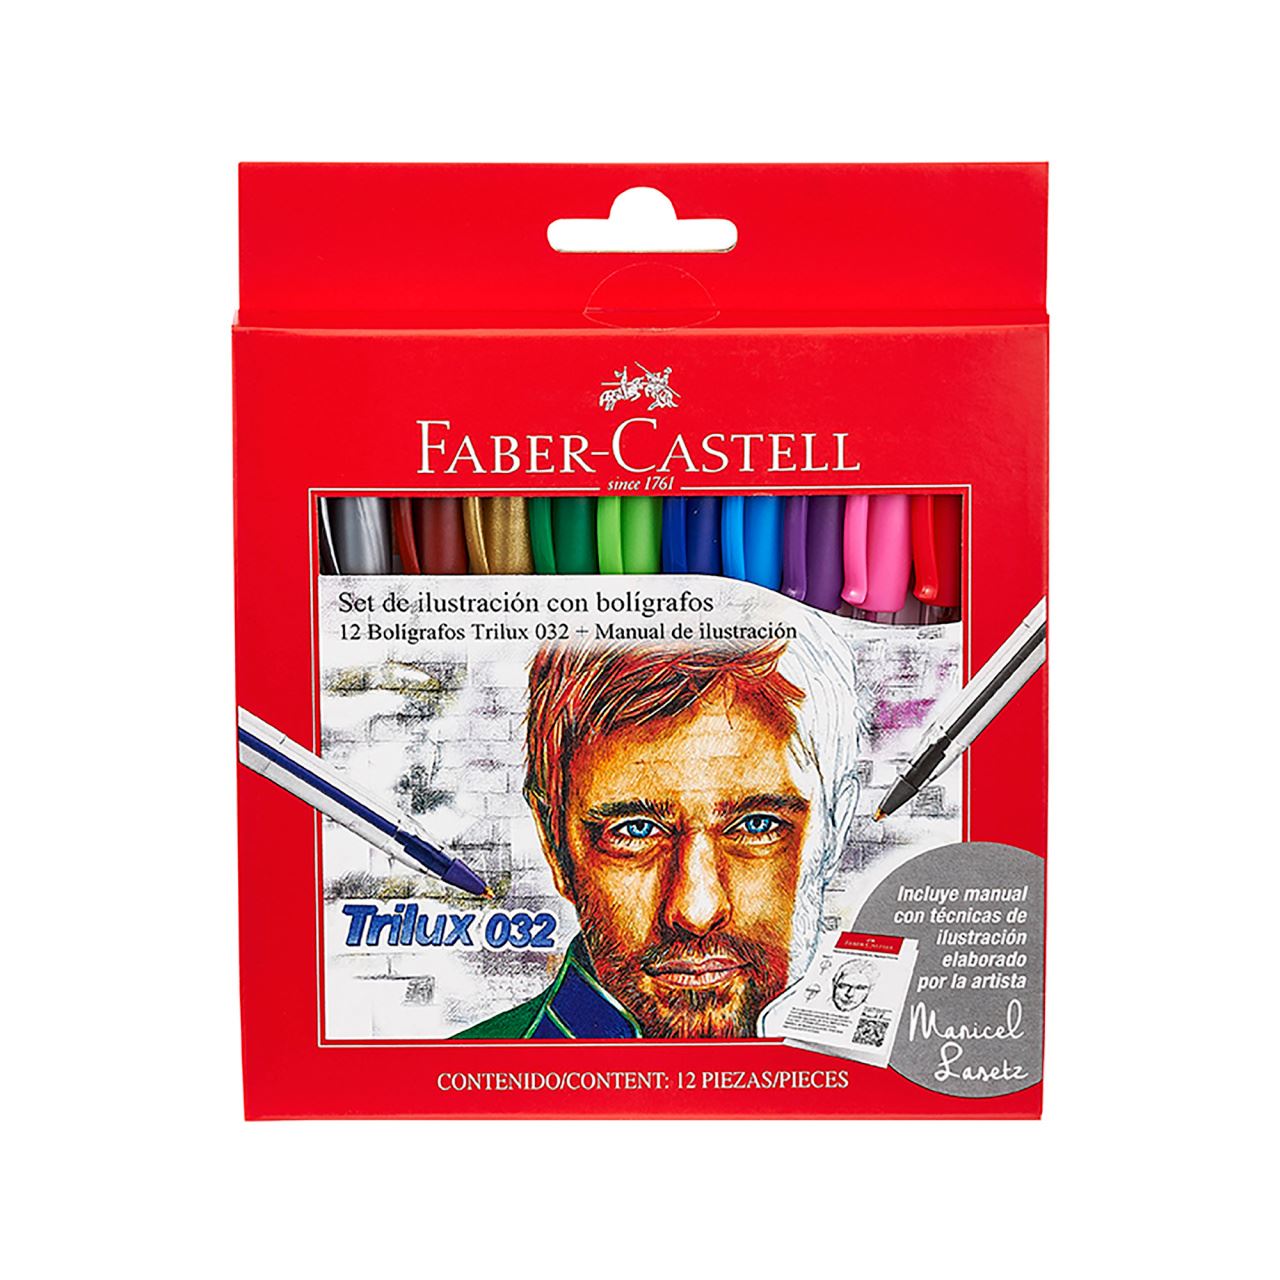 Faber-Castell - Set de ilustración + 12 bolígrafos Trilux